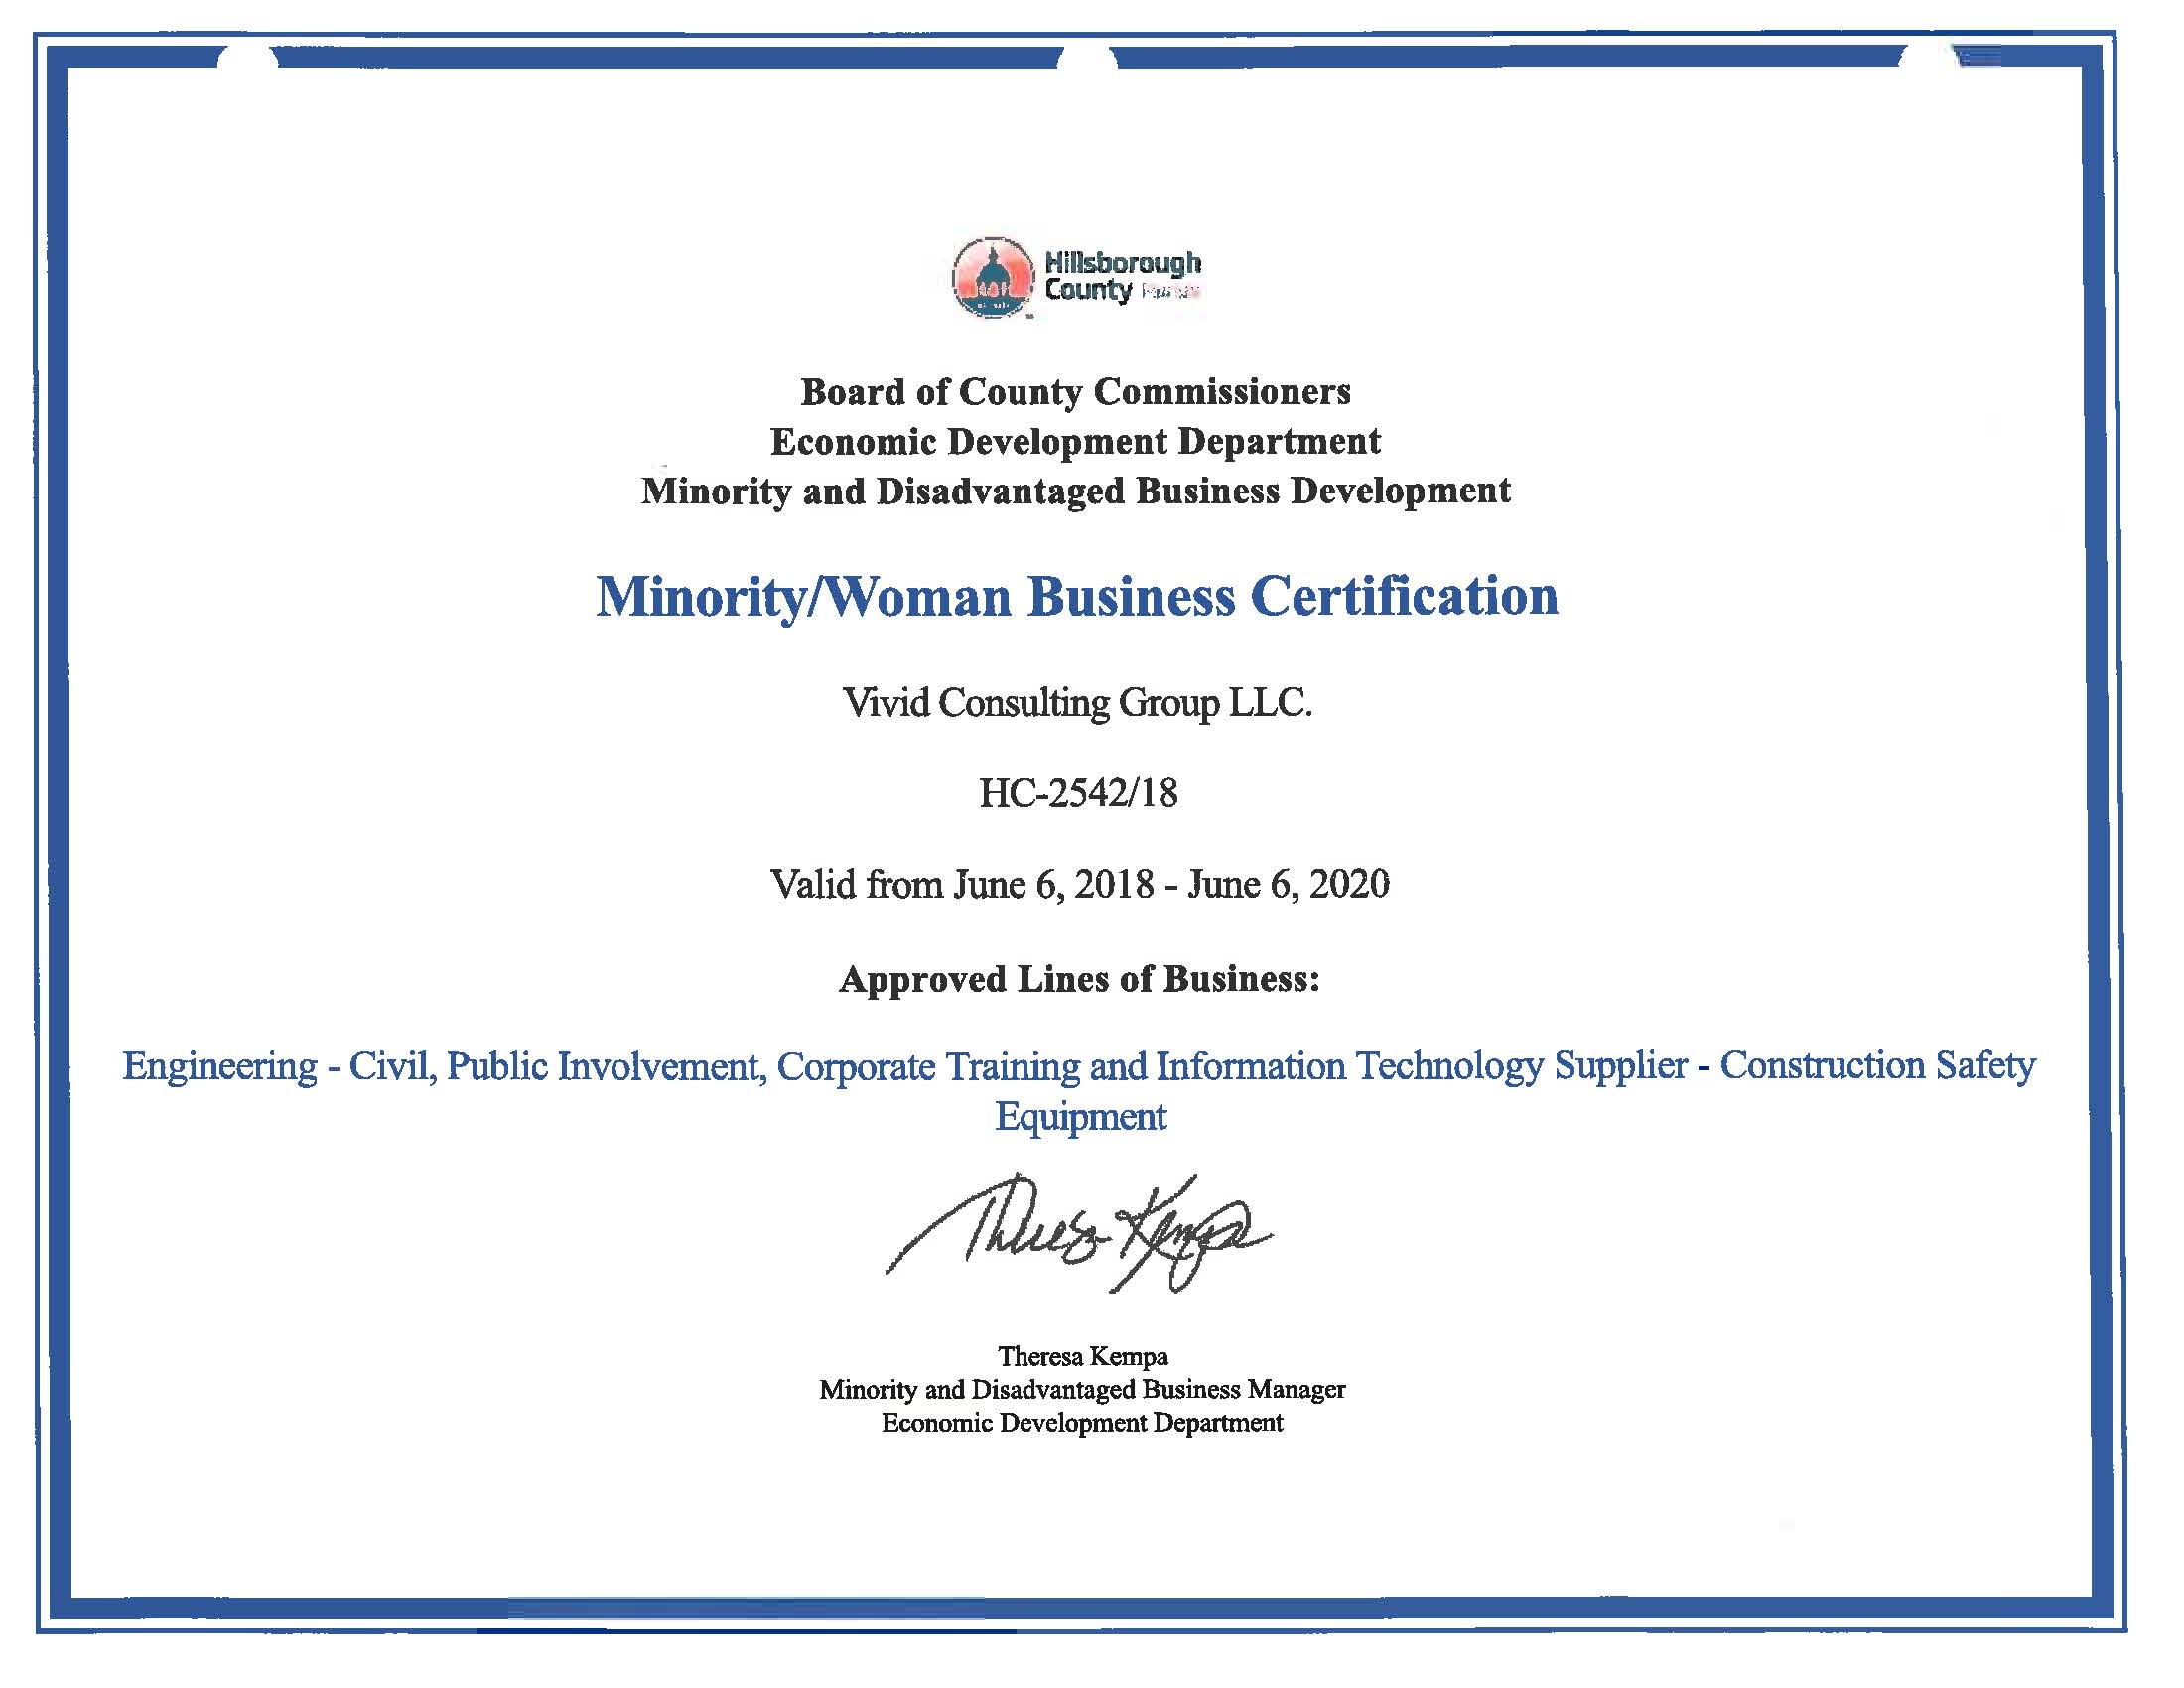 Hills Cty - Minority Women Certification 2018 - 2020